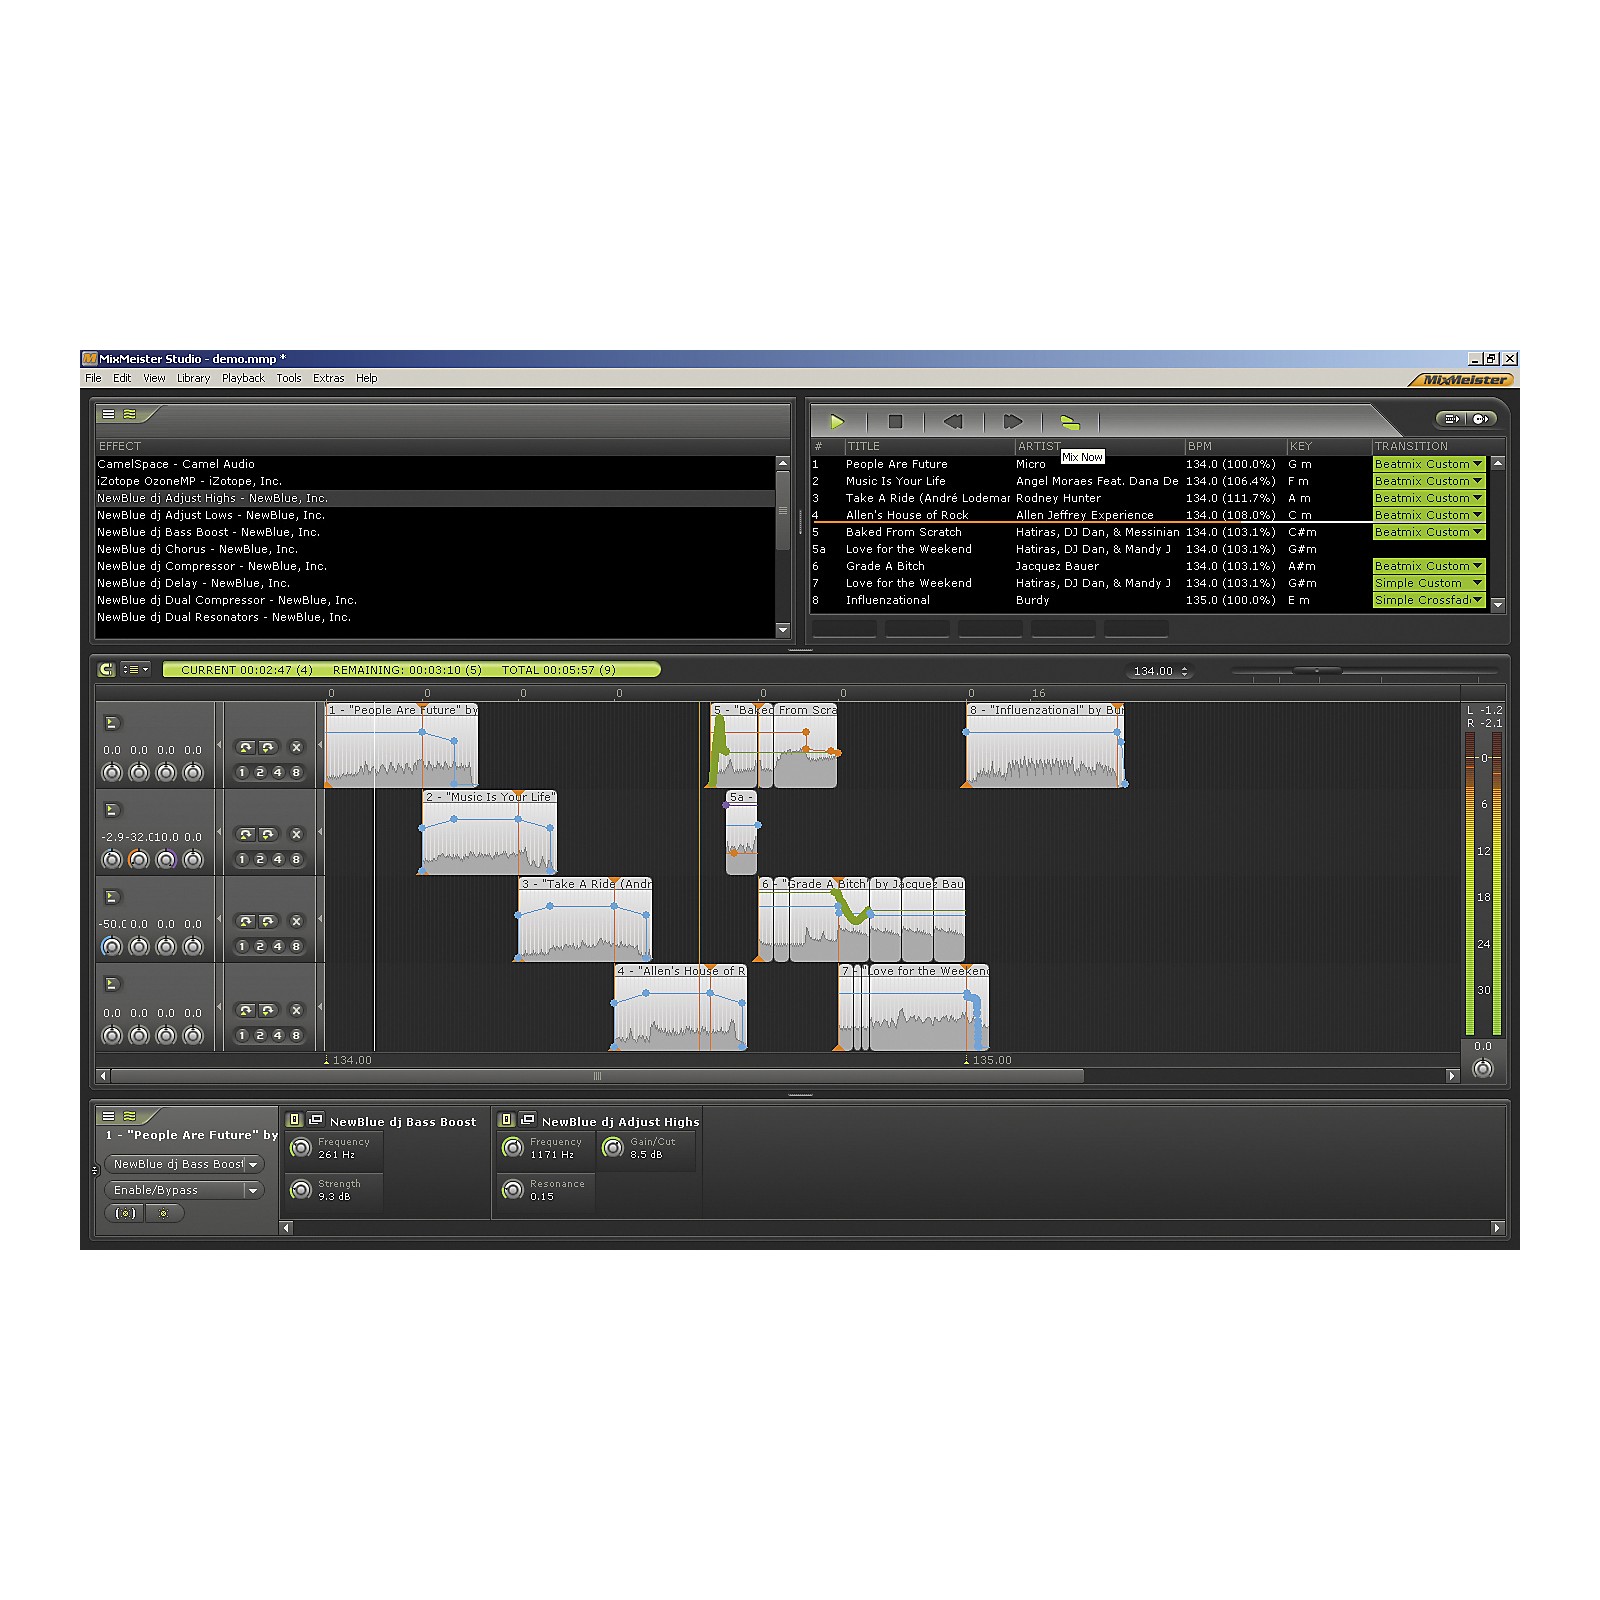 mixmeister express 7.0.9.0 download